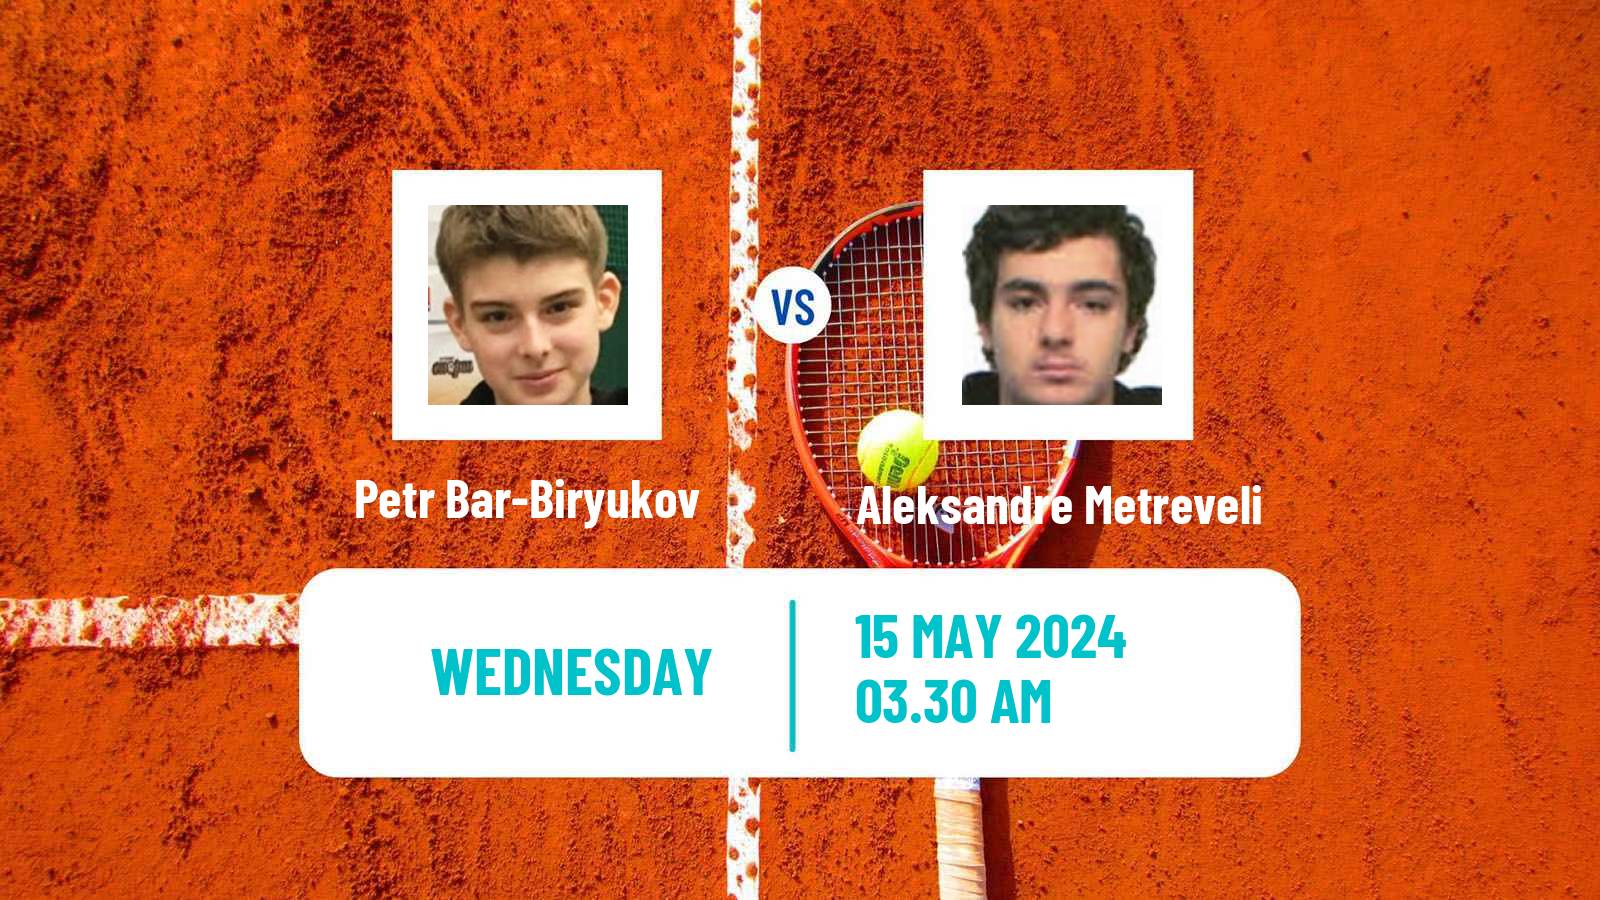 Tennis ITF M25 Kachreti Men Petr Bar-Biryukov - Aleksandre Metreveli